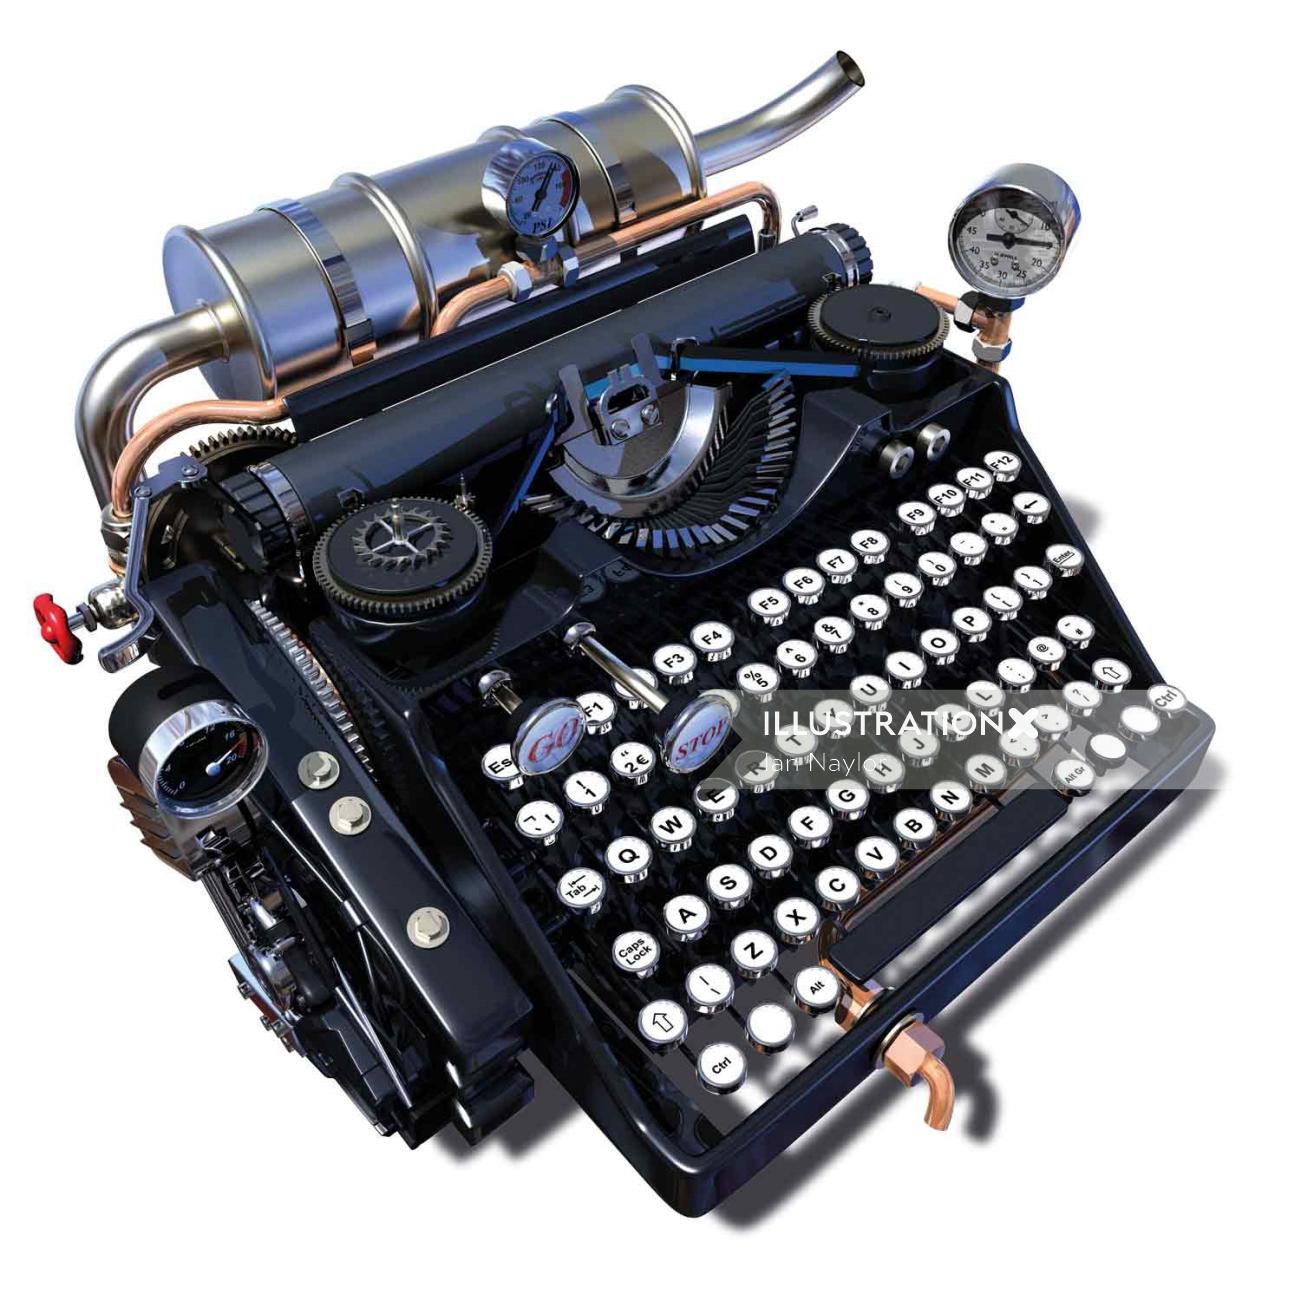 Typewriter illustration by Ian Naylor